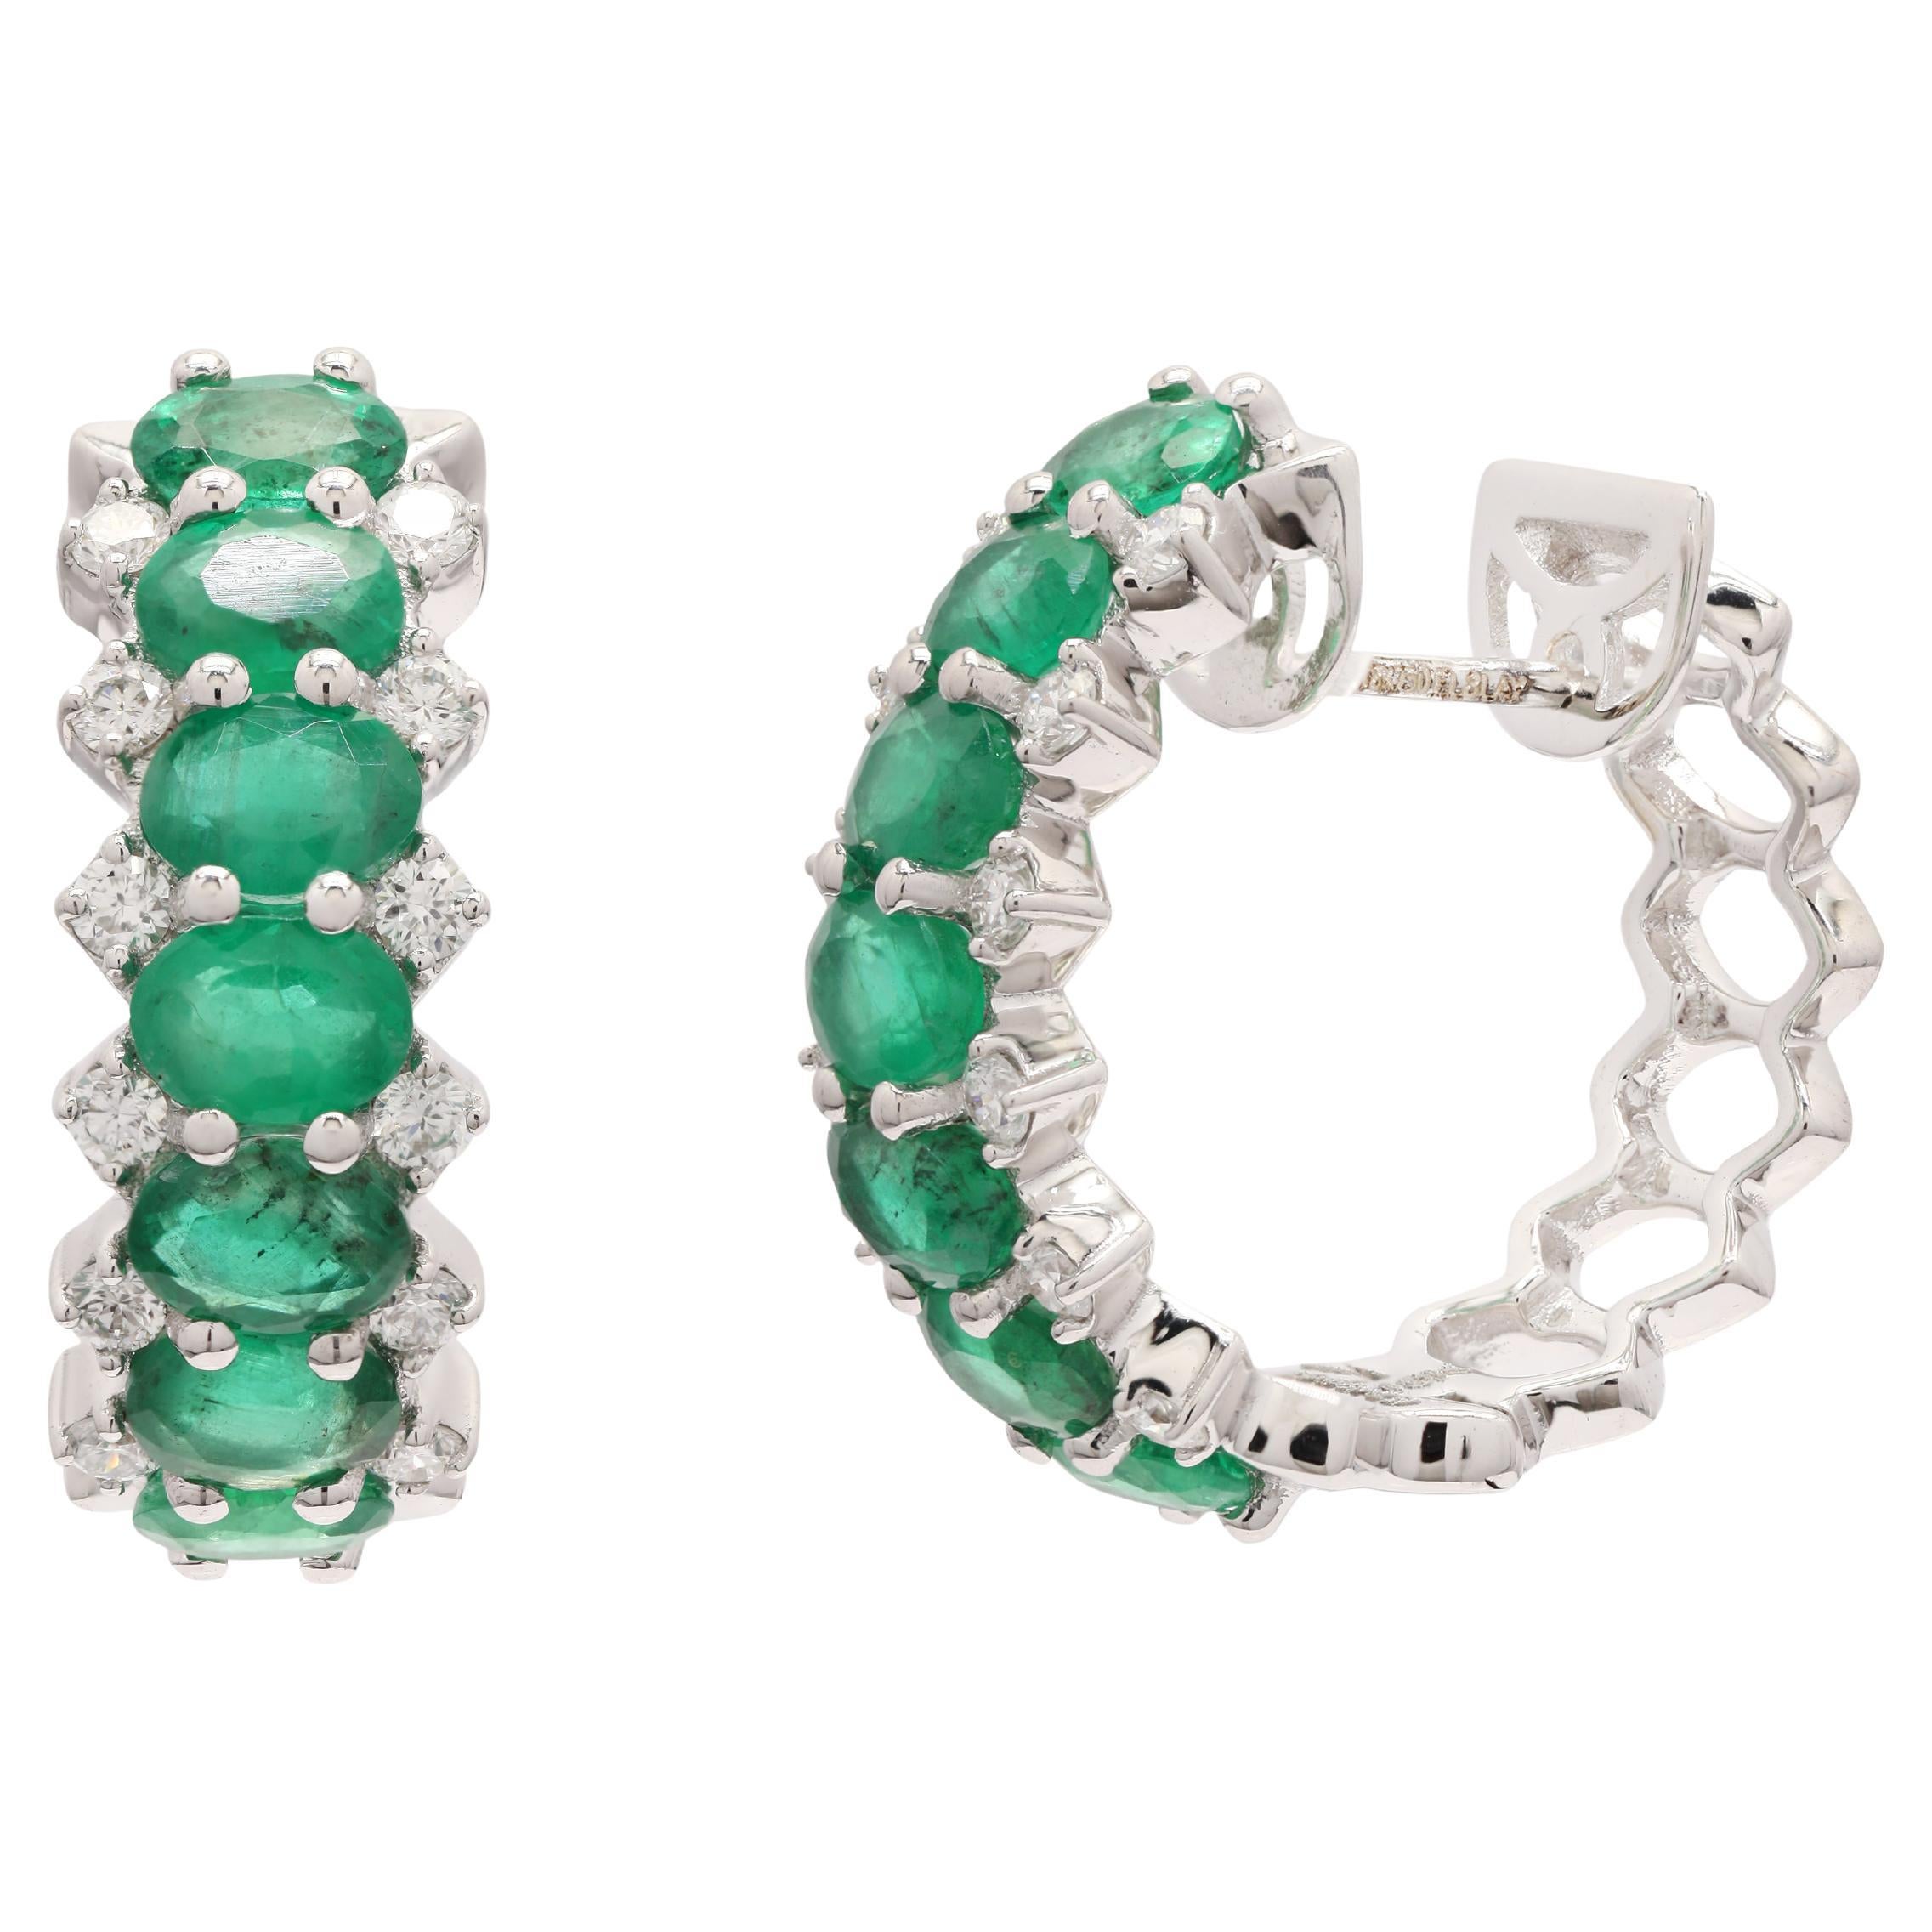 2.43 Carat Natural Emerald and Diamond Designer Hoop Earrings in 18K White Gold